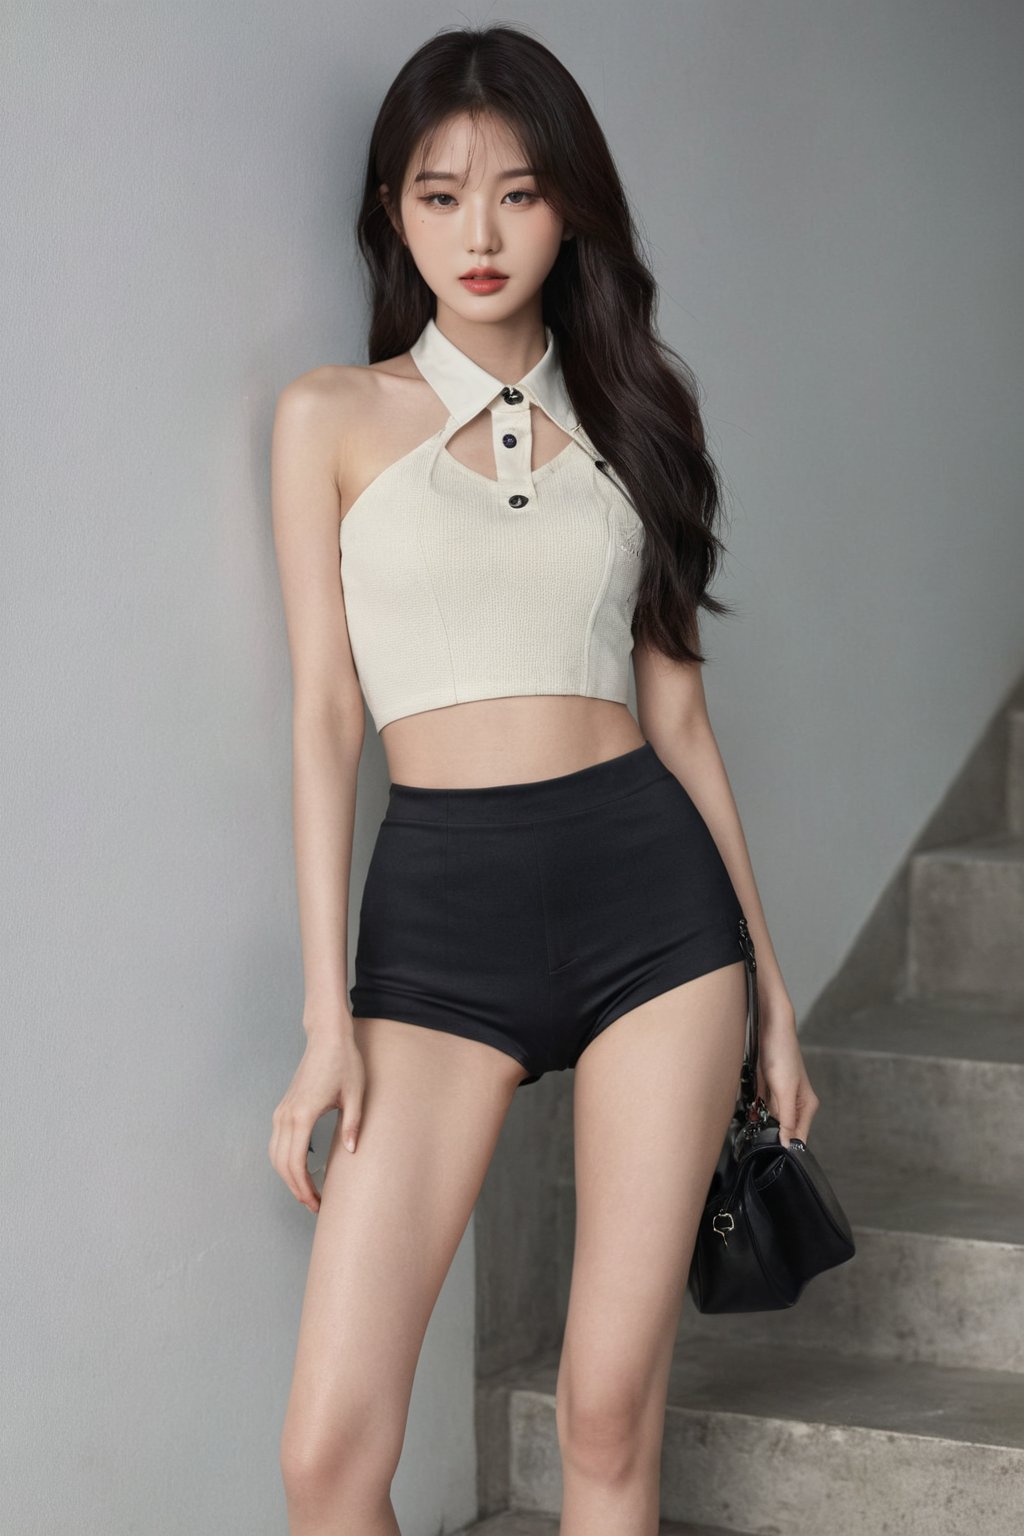 hubggirl,  (Cinematic Aesthetic:1.4) ,
Cinematic Photo of a beautiful sexy korean fashion model,
full body shot, 